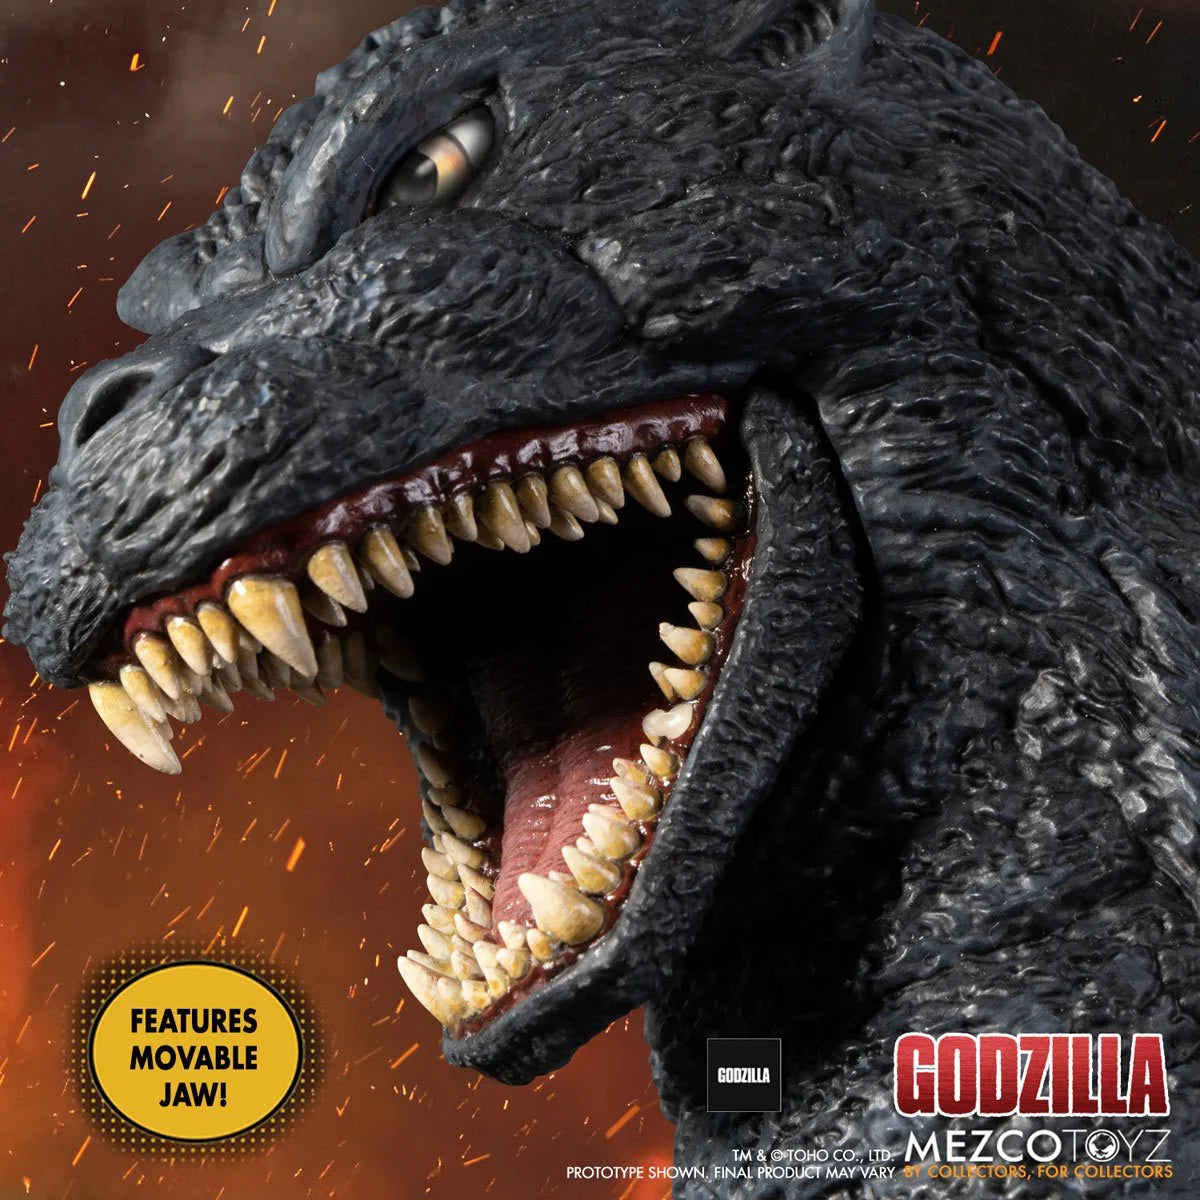 MEZCO - Ultimate Godzilla Light-Up and Sound 18-Inch Mega-Scale